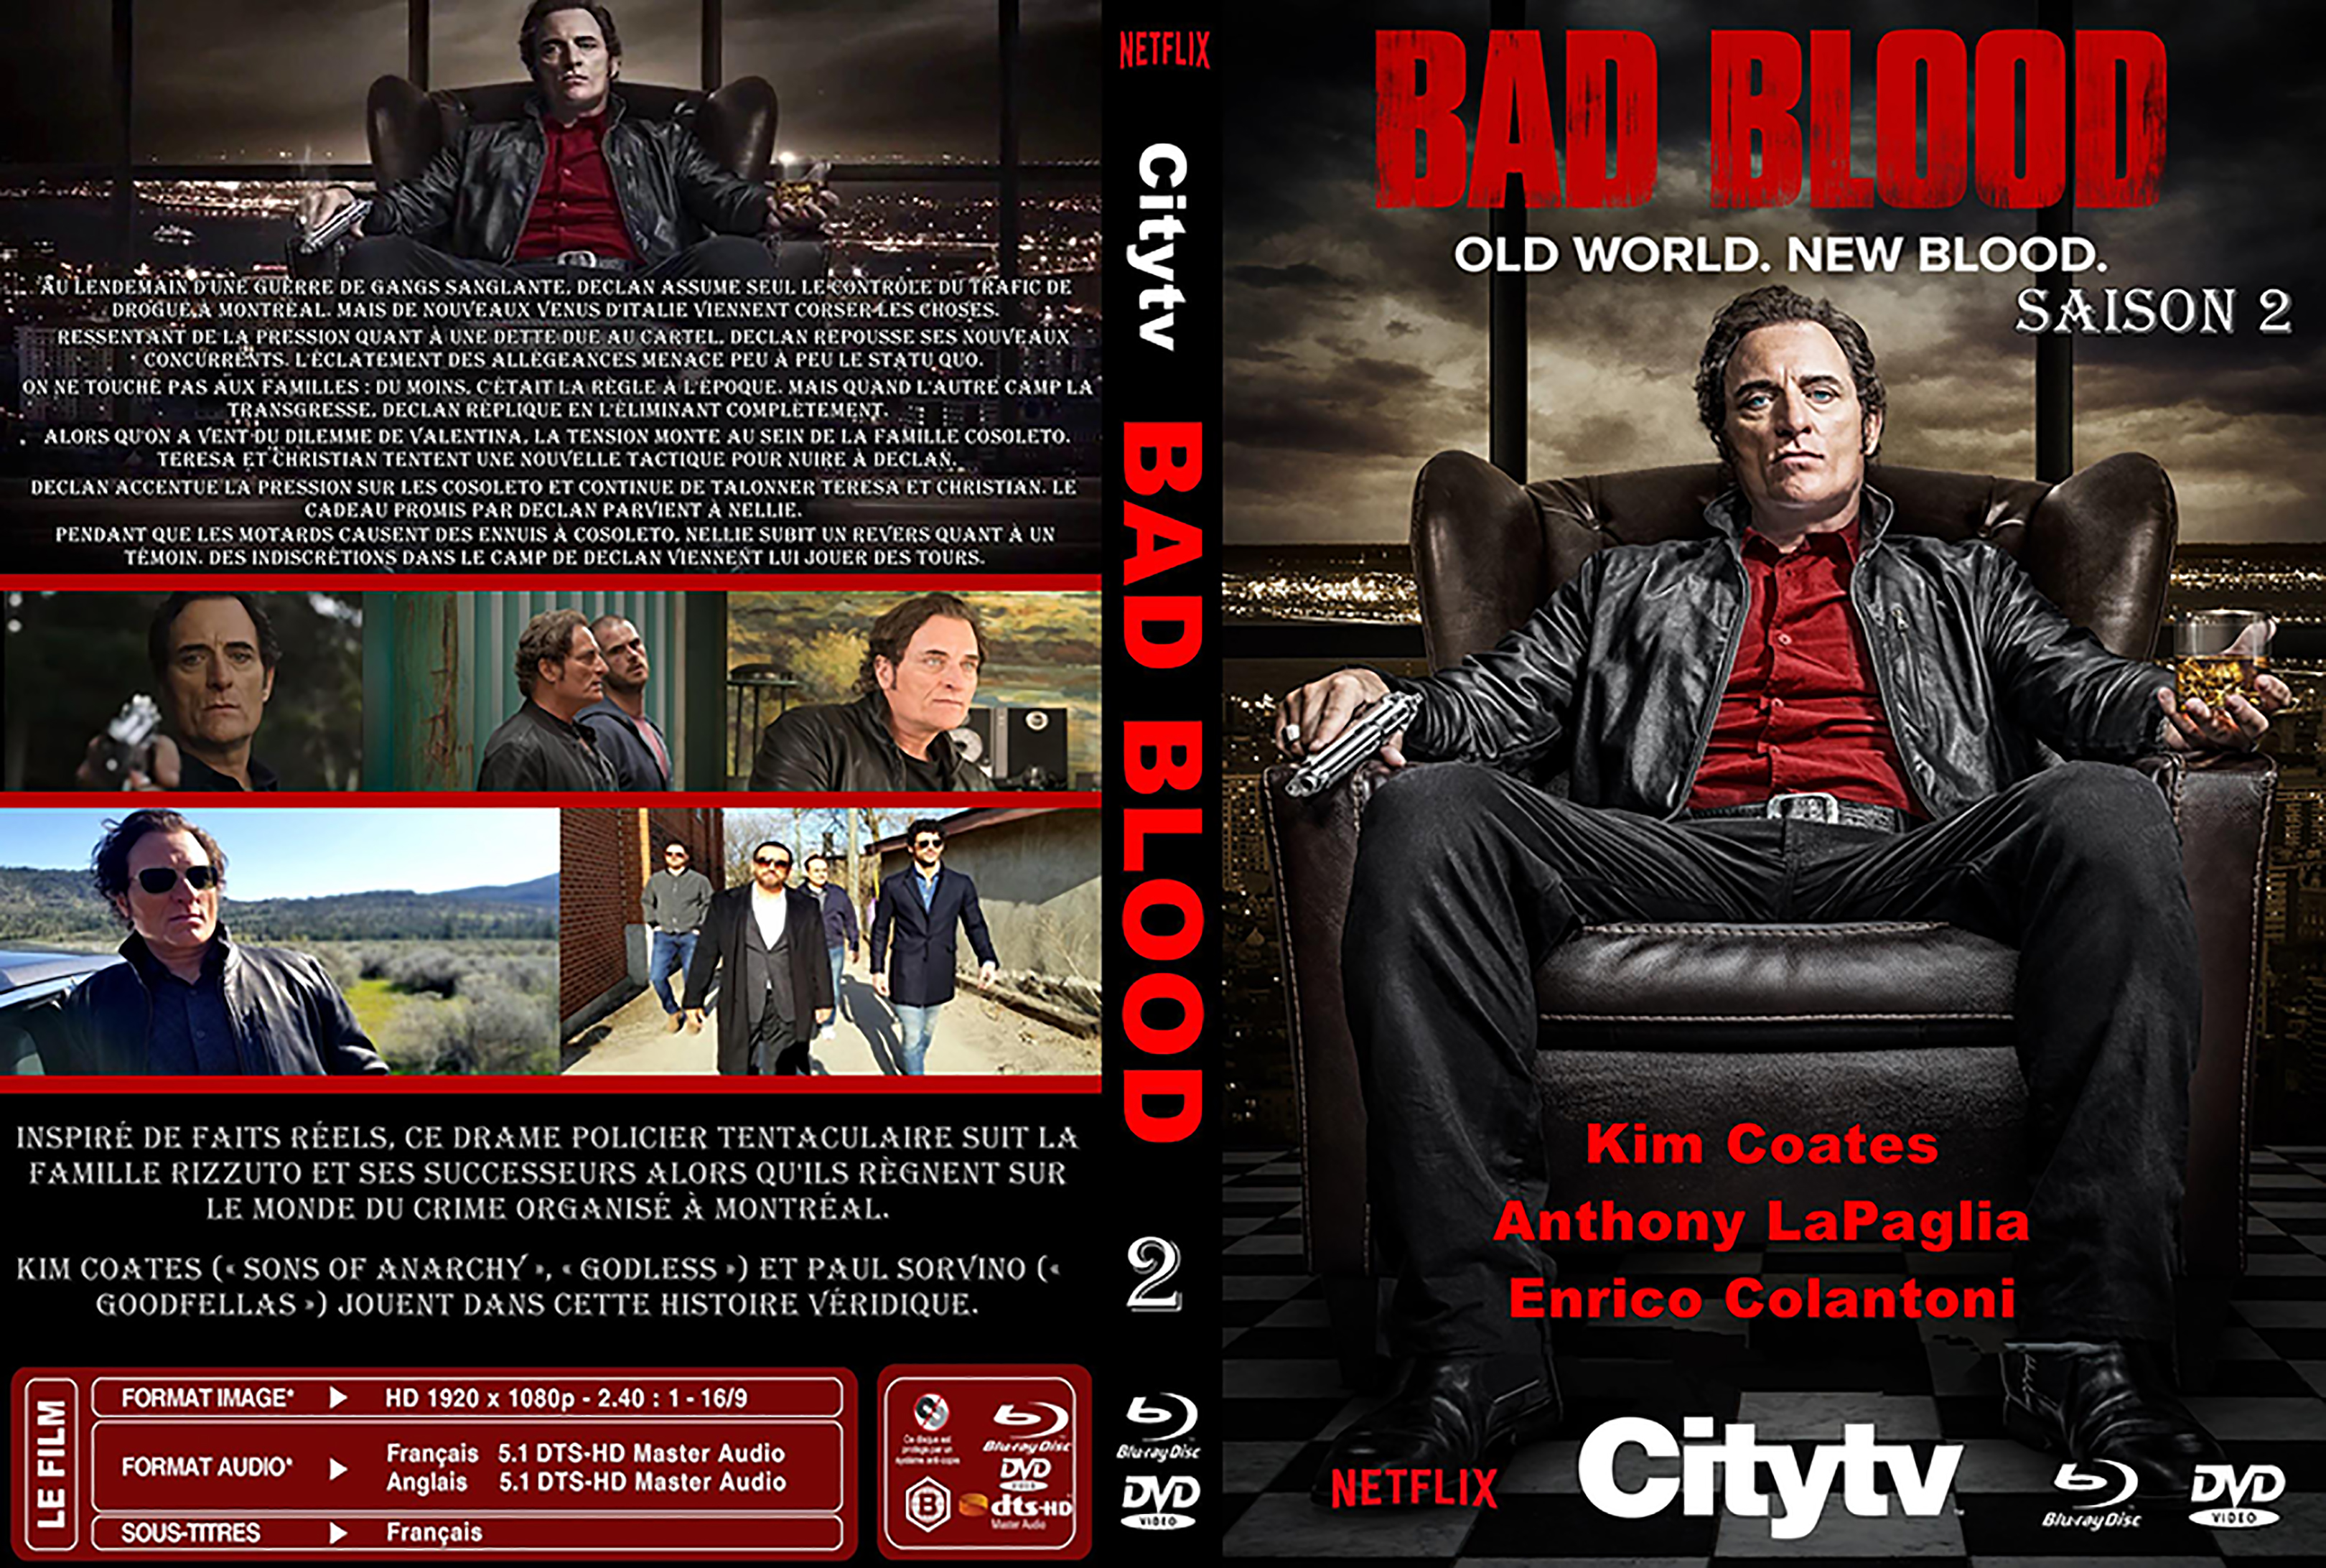 Jaquette DVD Bad blood saison 2 custom